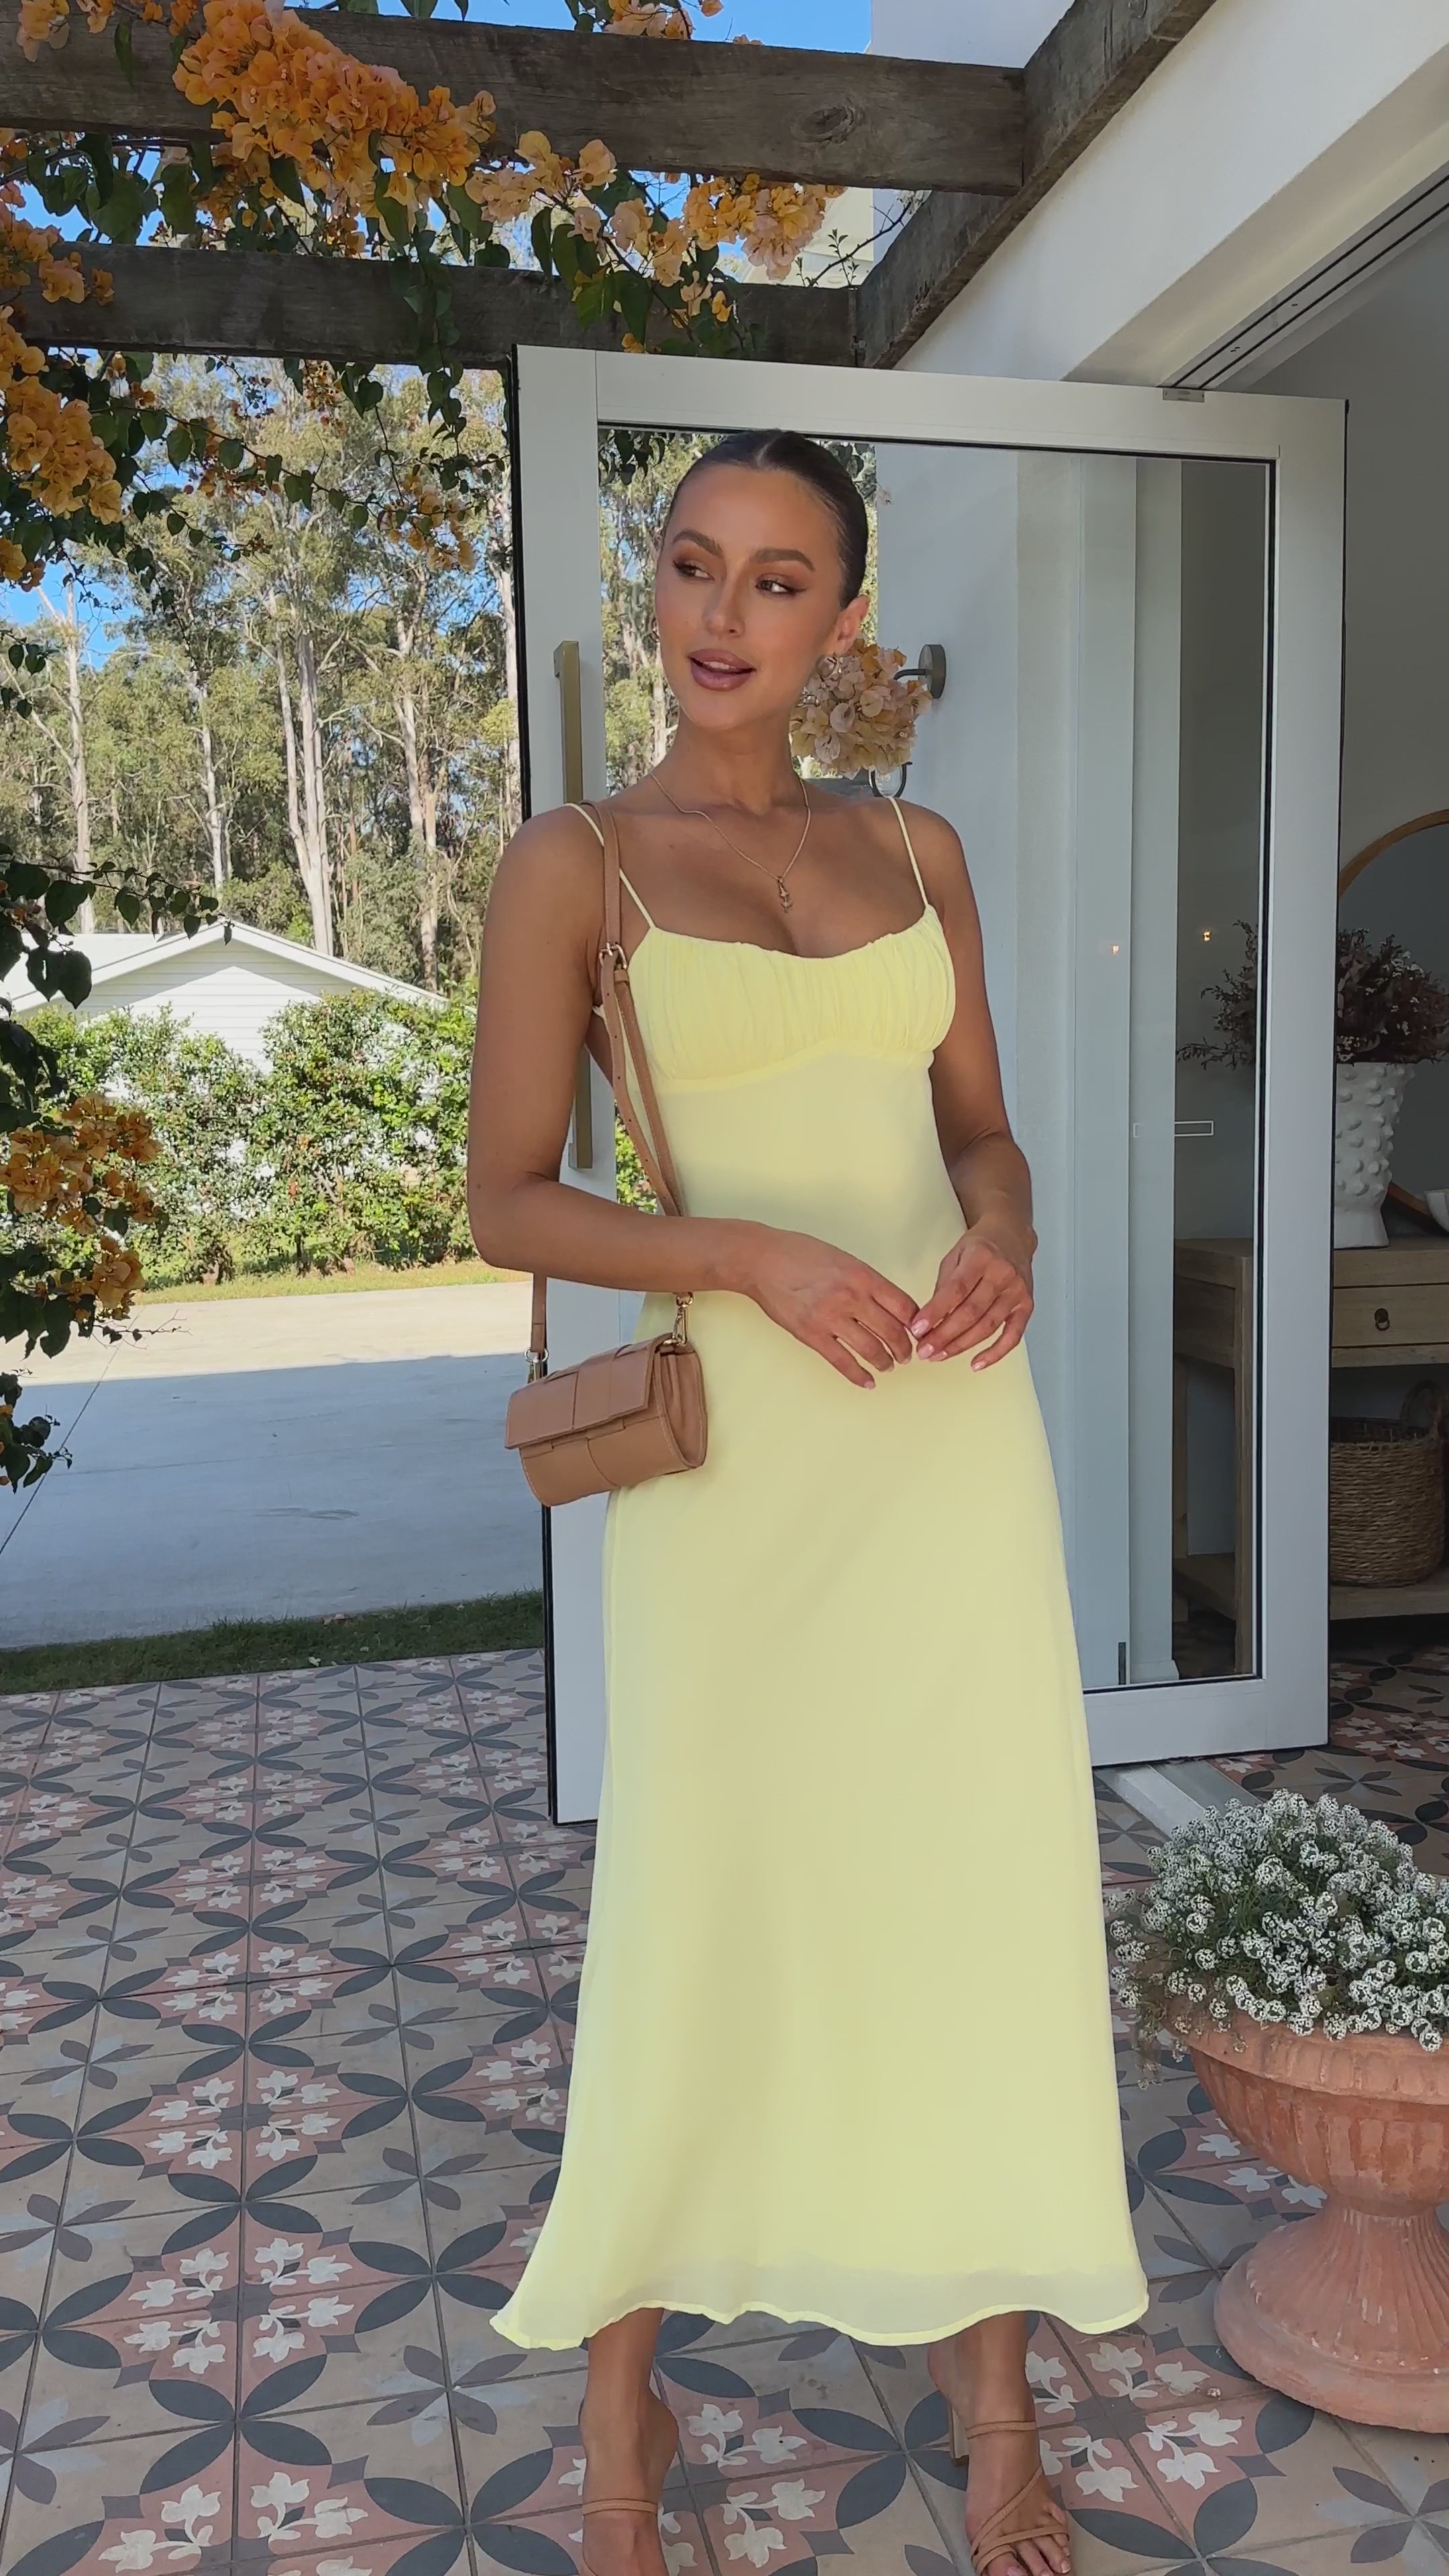 The Yellow Midi Dress I Love Wearing - Finding Beautiful Truth